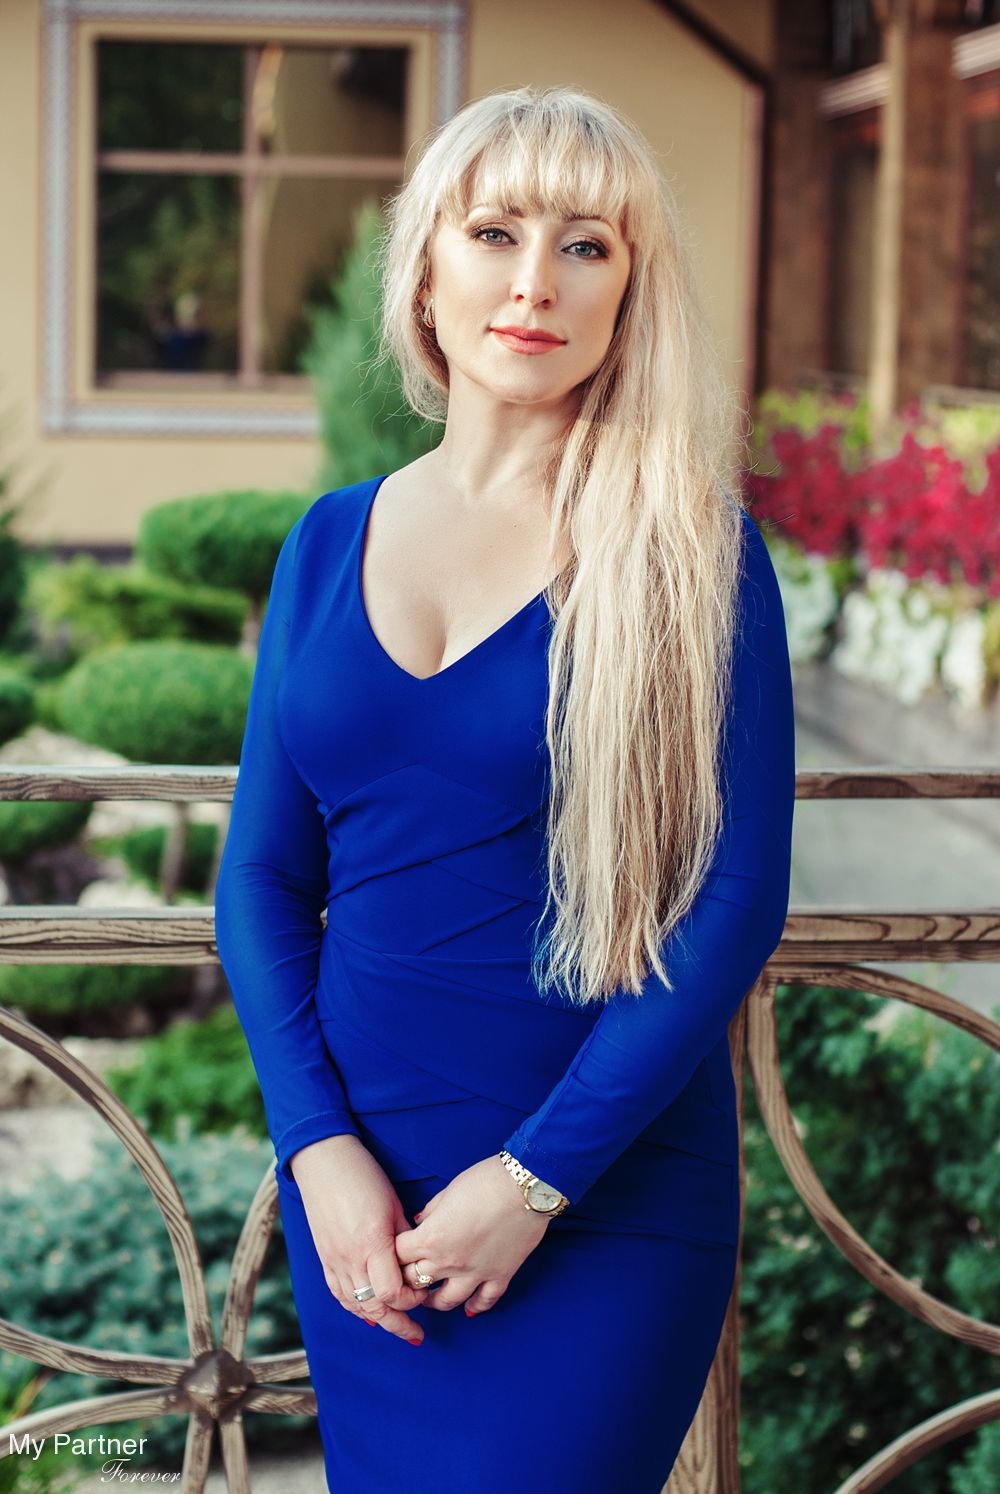 Dating Site to Meet Sexy Ukrainian Girl Nataliya from Poltava, Ukraine